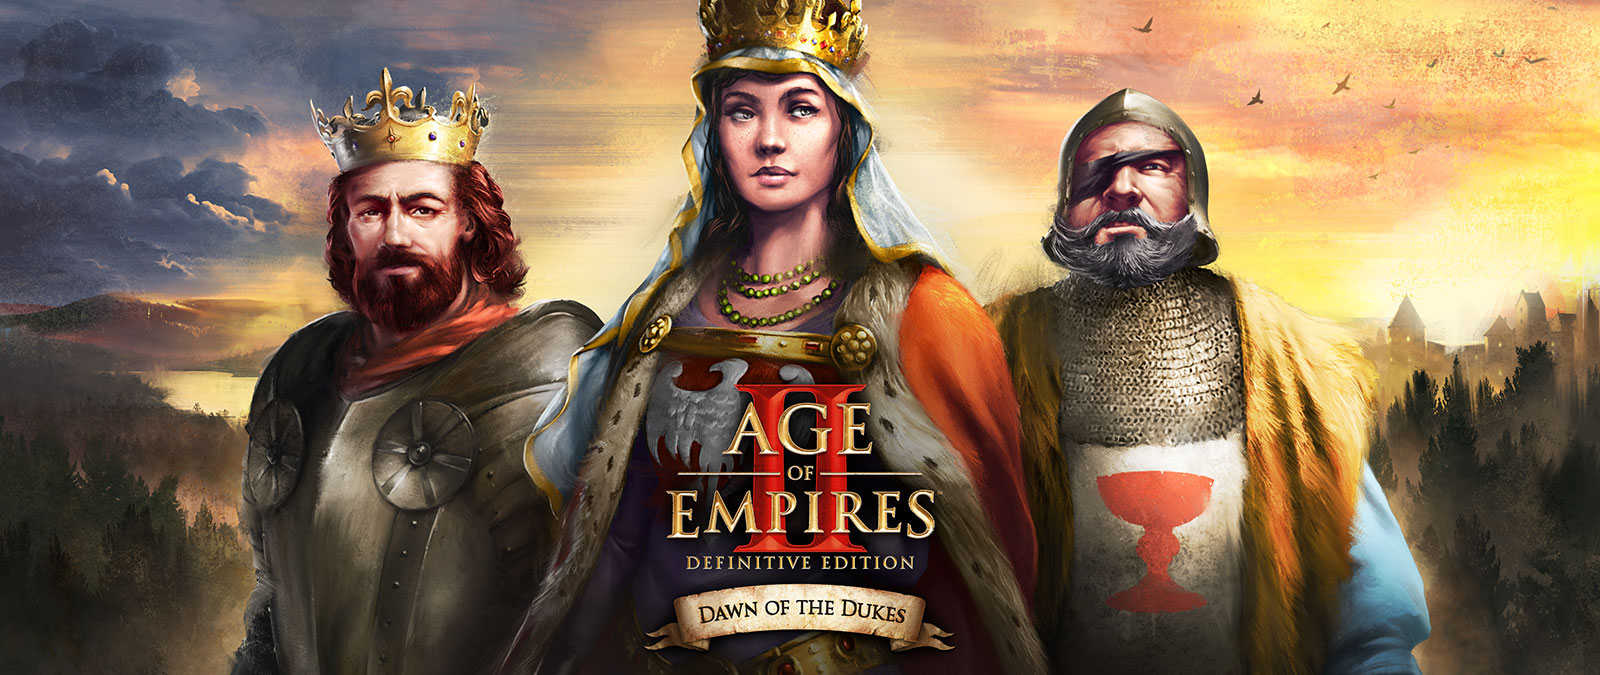 age of empires 2 hd 4k